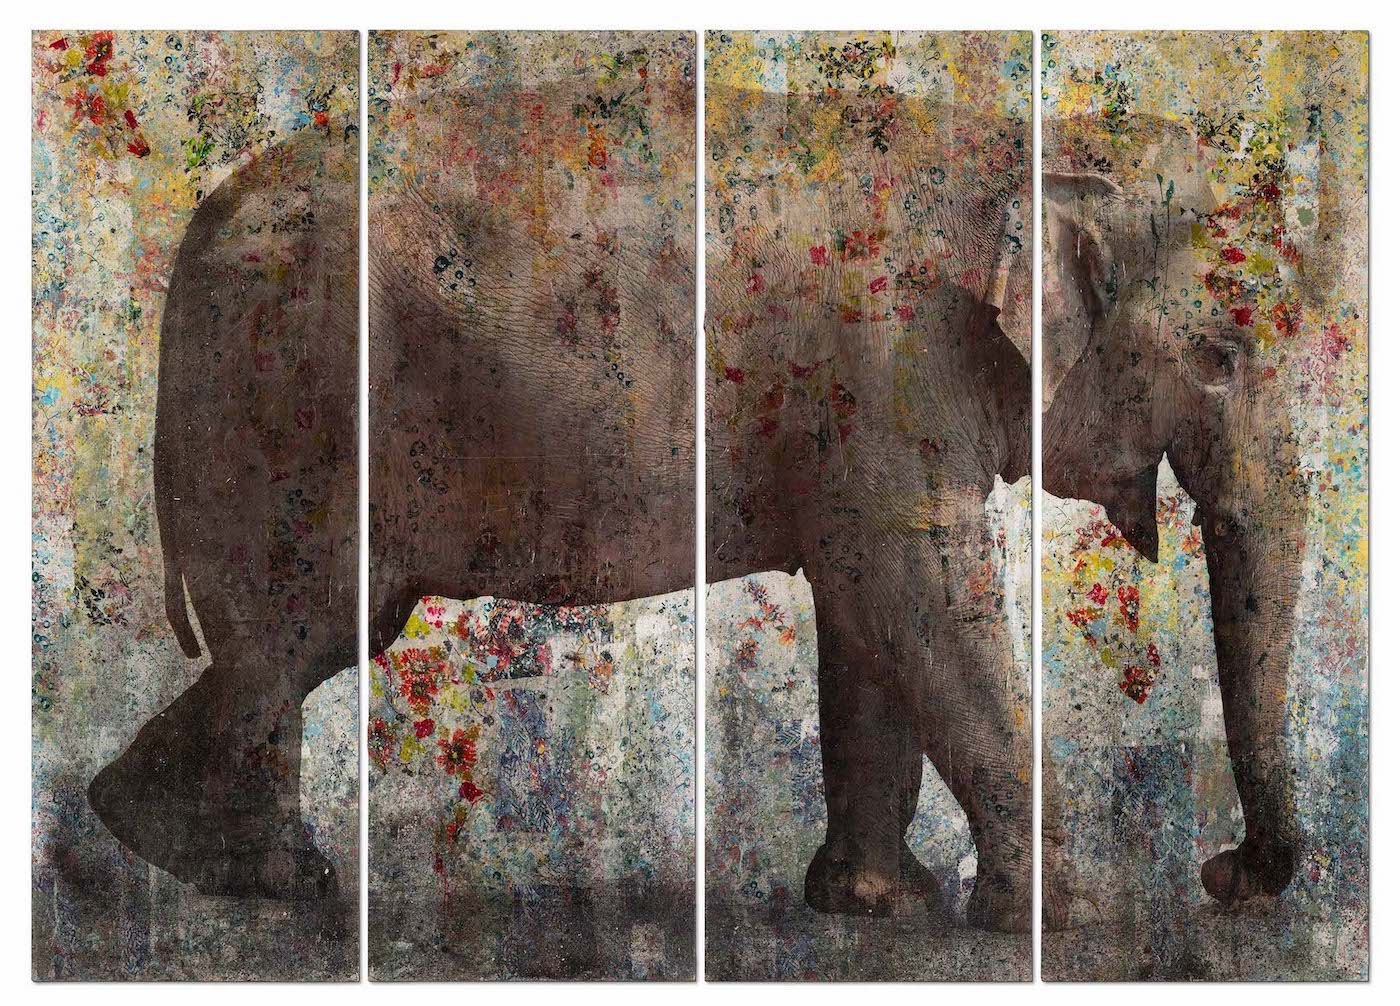 Manuel Felisi Elefante 2020 tecnica mista su legno 300 x 421 cm copia